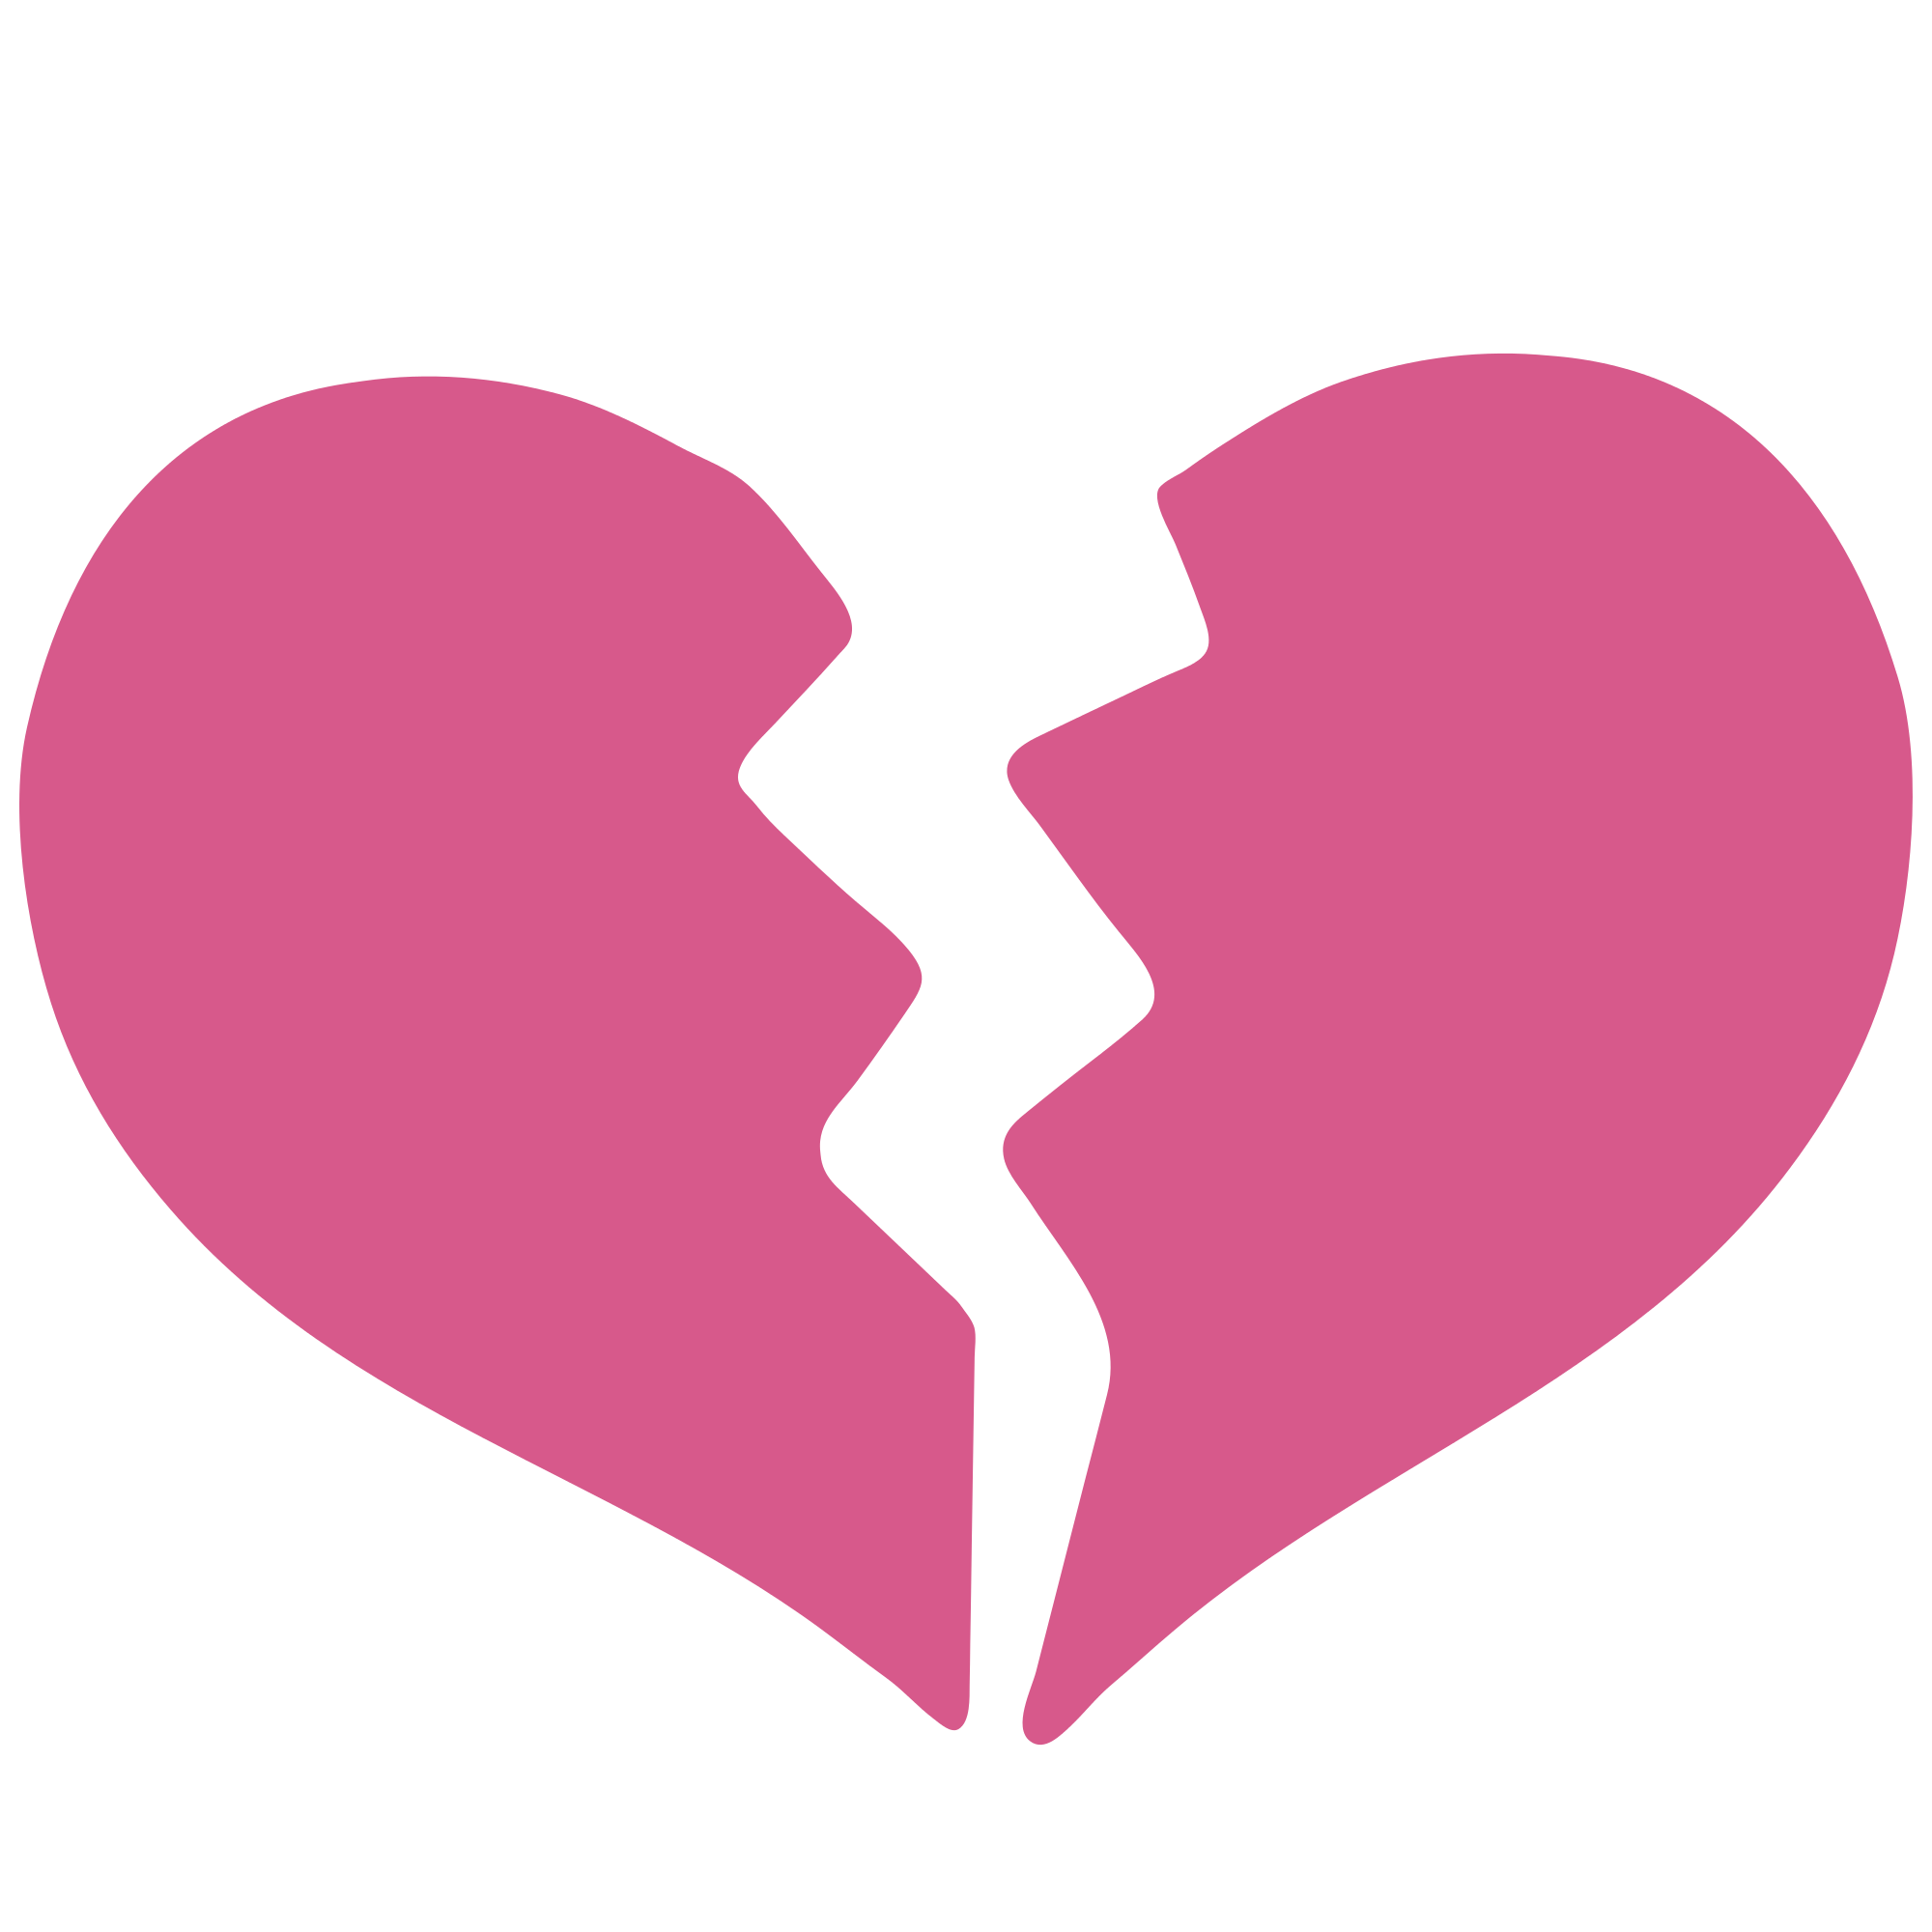 heart emoji clipart - photo #42